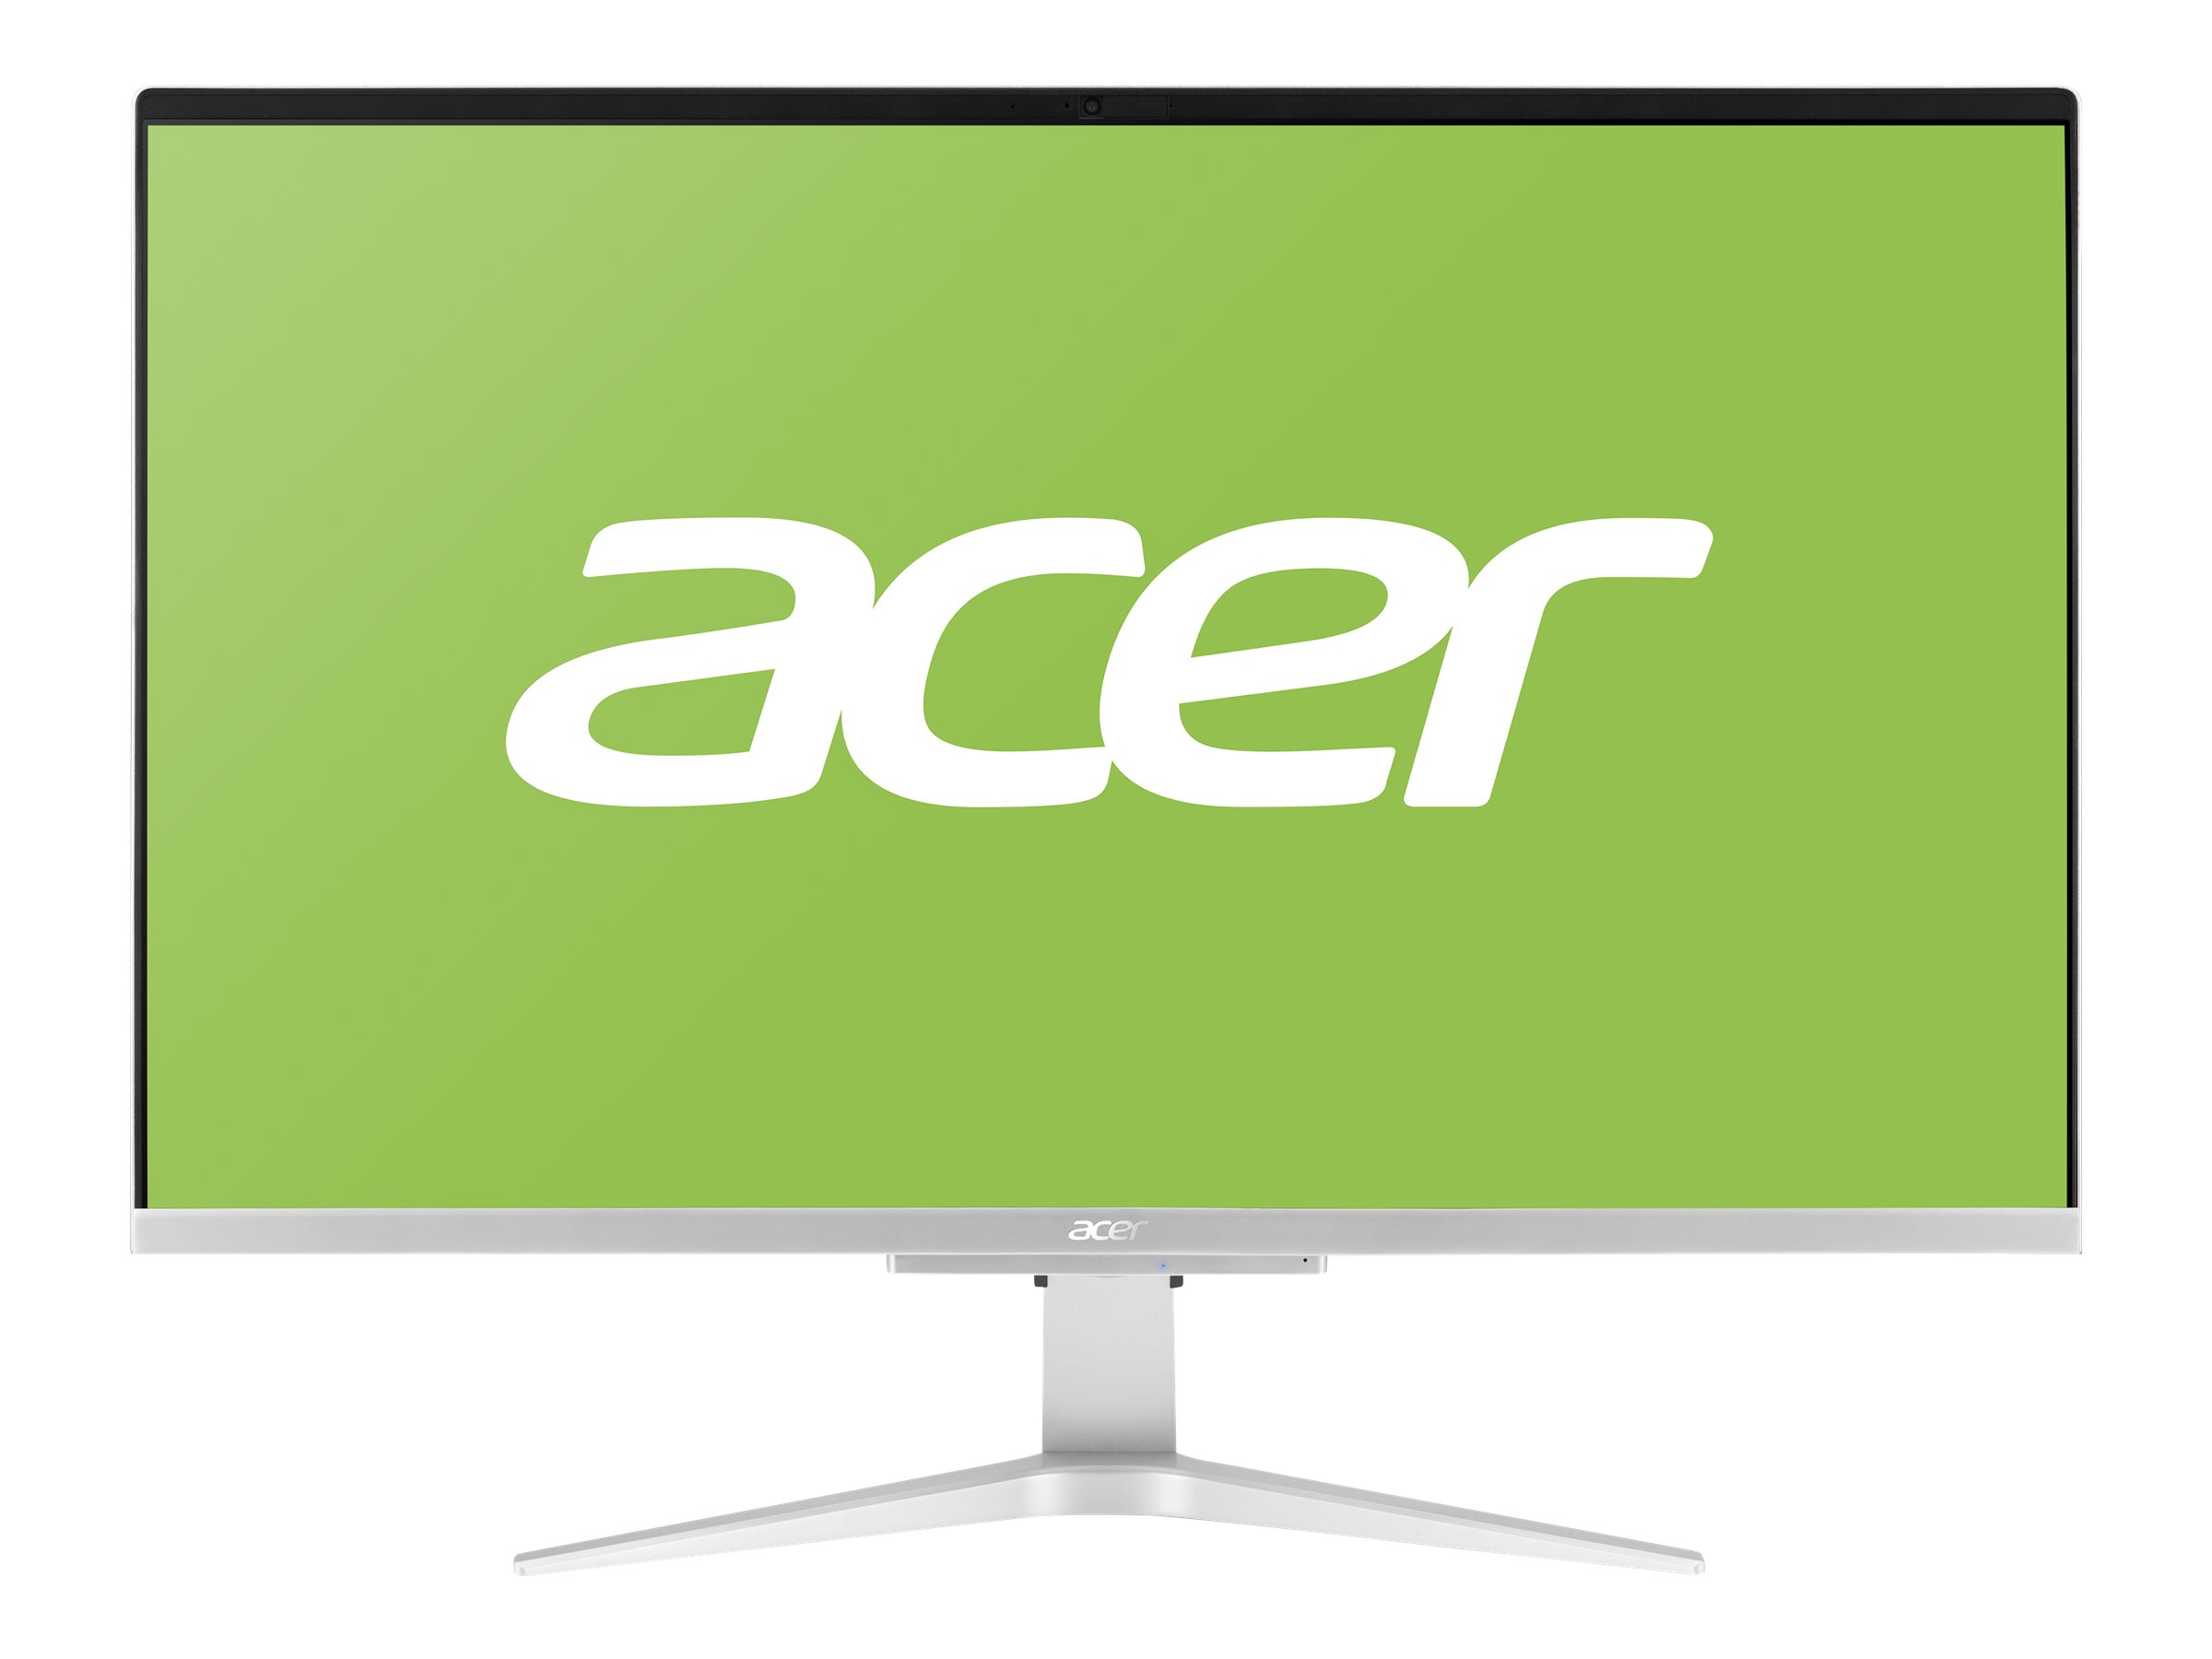 Acer Aspire C 27 C27-962 - All-in-one - Core i5 1035G1 / 1 GHz - RAM 12 GB - SSD 512 GB - GF MX130 - GigE, 802.11ac Wave 2 - WLAN: 802.11a/b/g/n/ac Wave 2, Bluetooth 5.0 - Win 10 Home 64-bit - monitor: LED 27" 1920 x 1080 (Full HD) - black - image 4 of 12